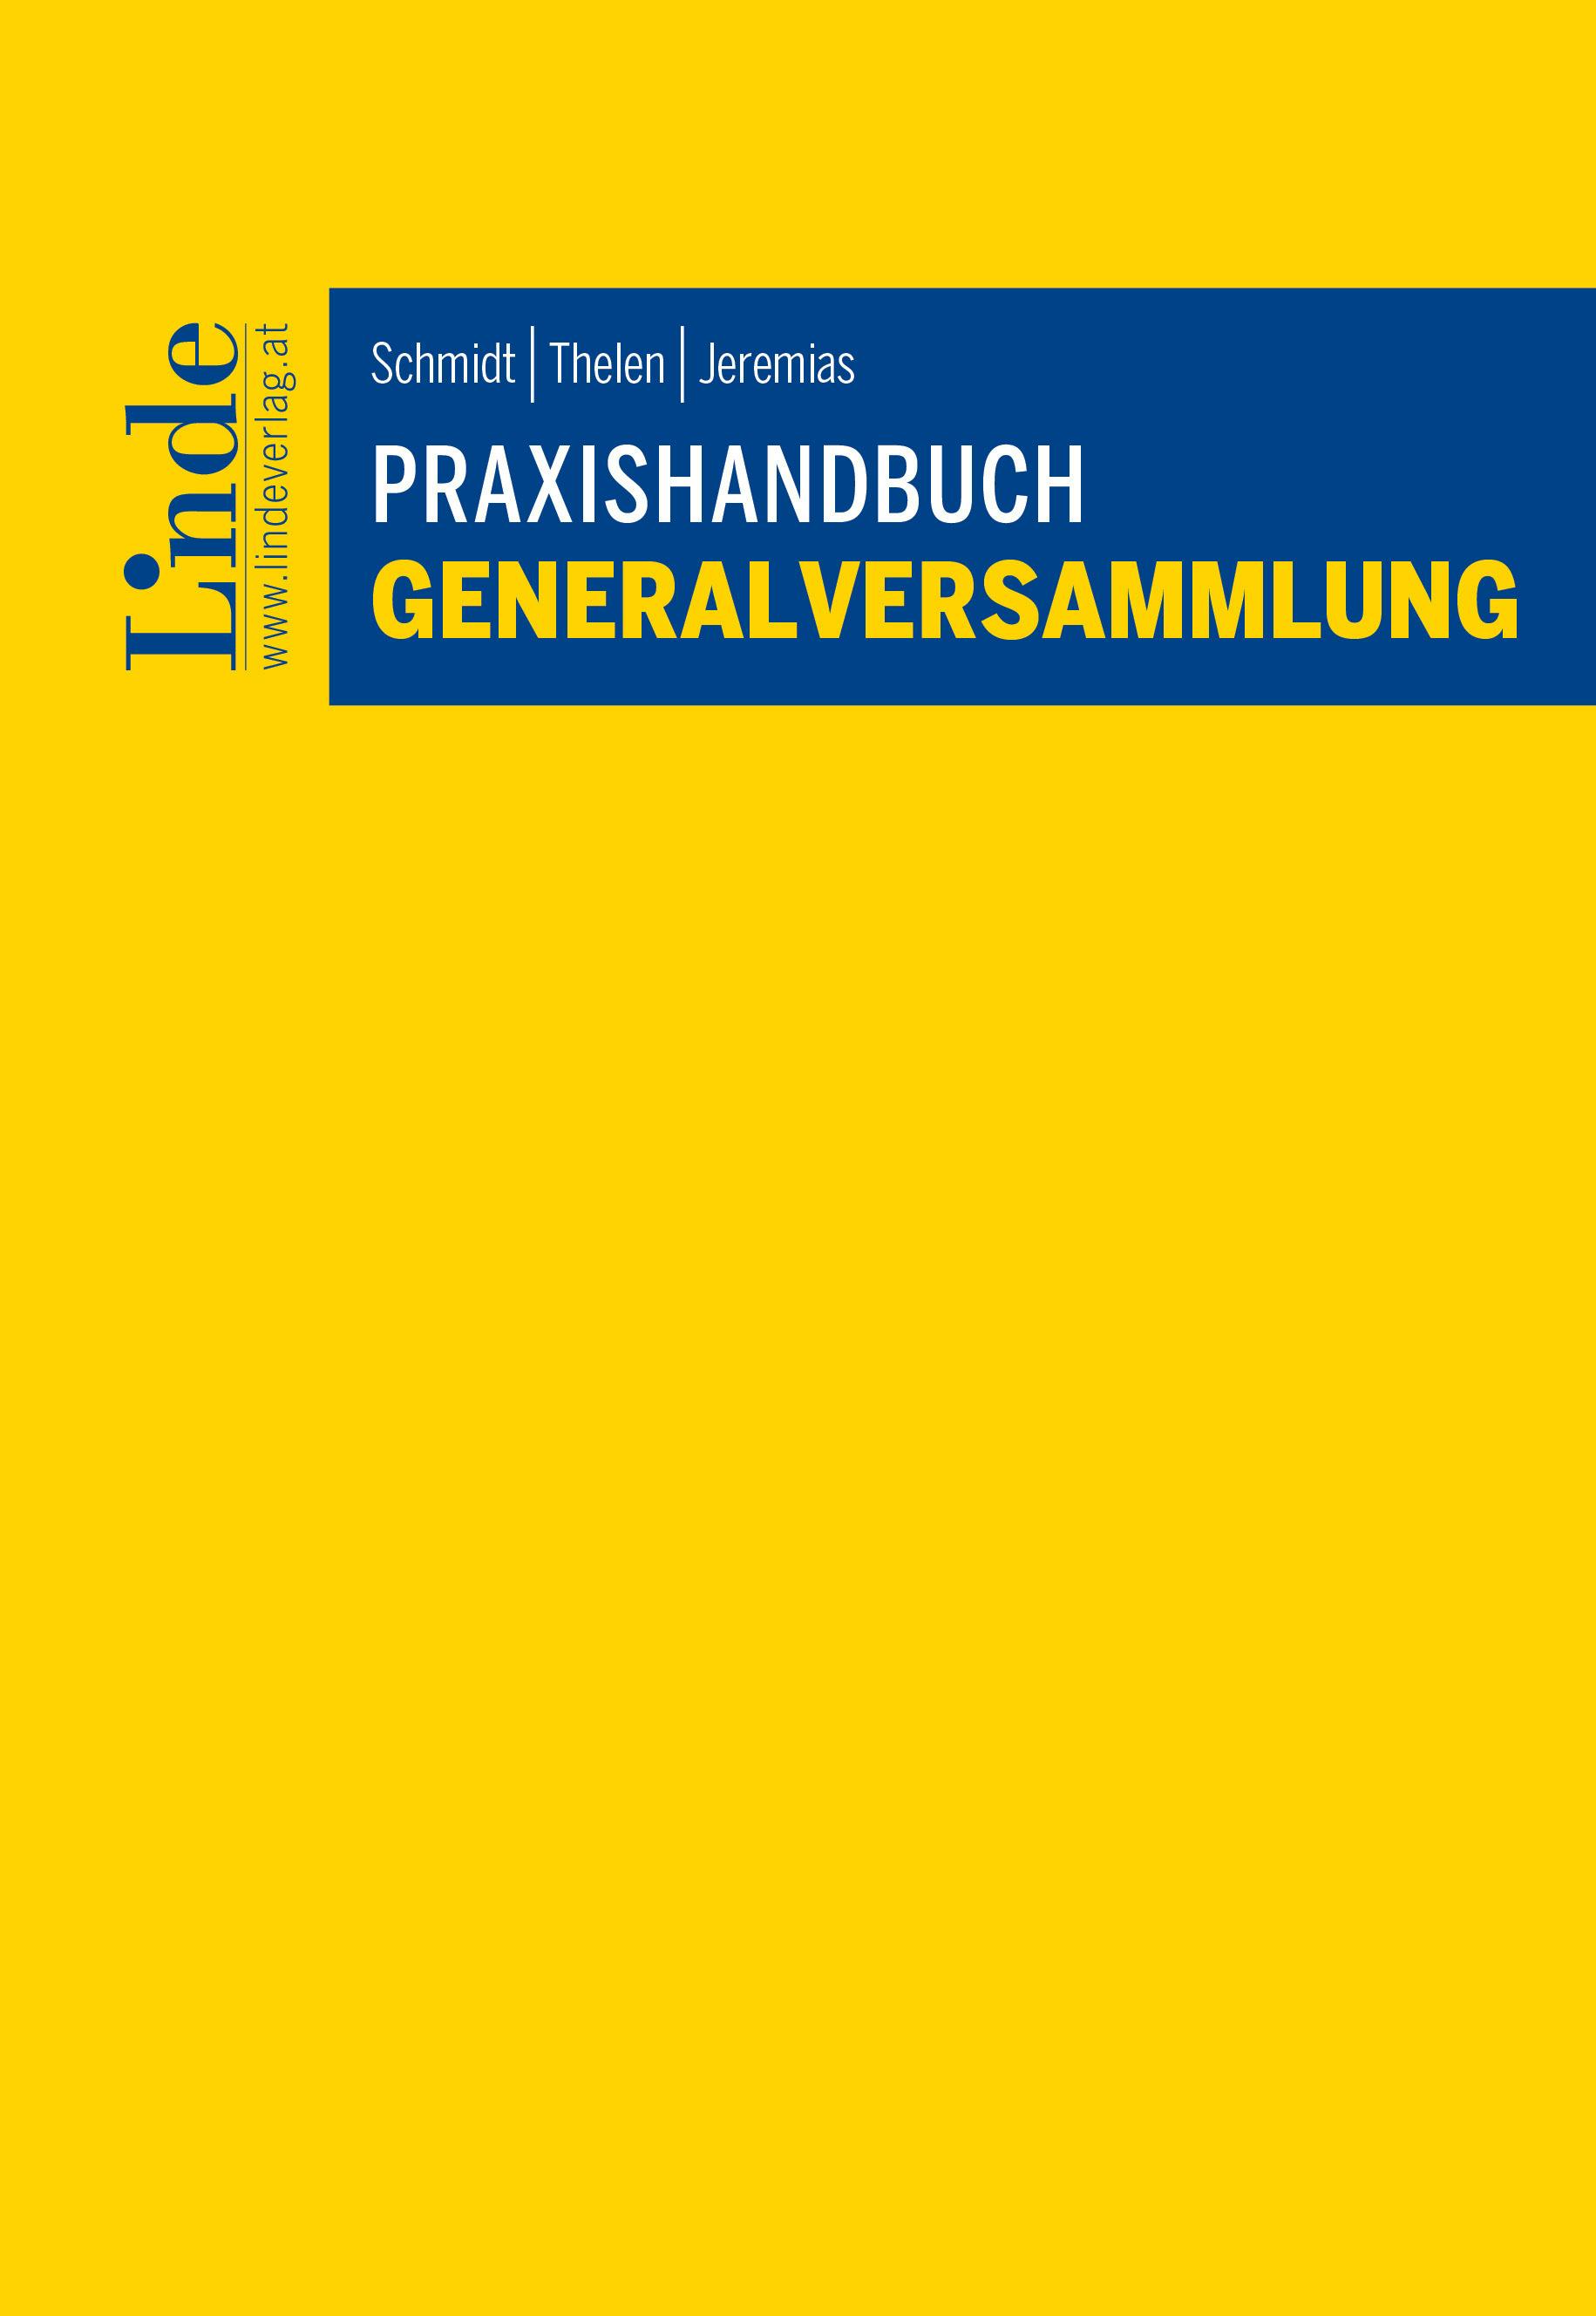 Schmidt | Thelen | Jeremias
Praxishandbuch Generalversammlung